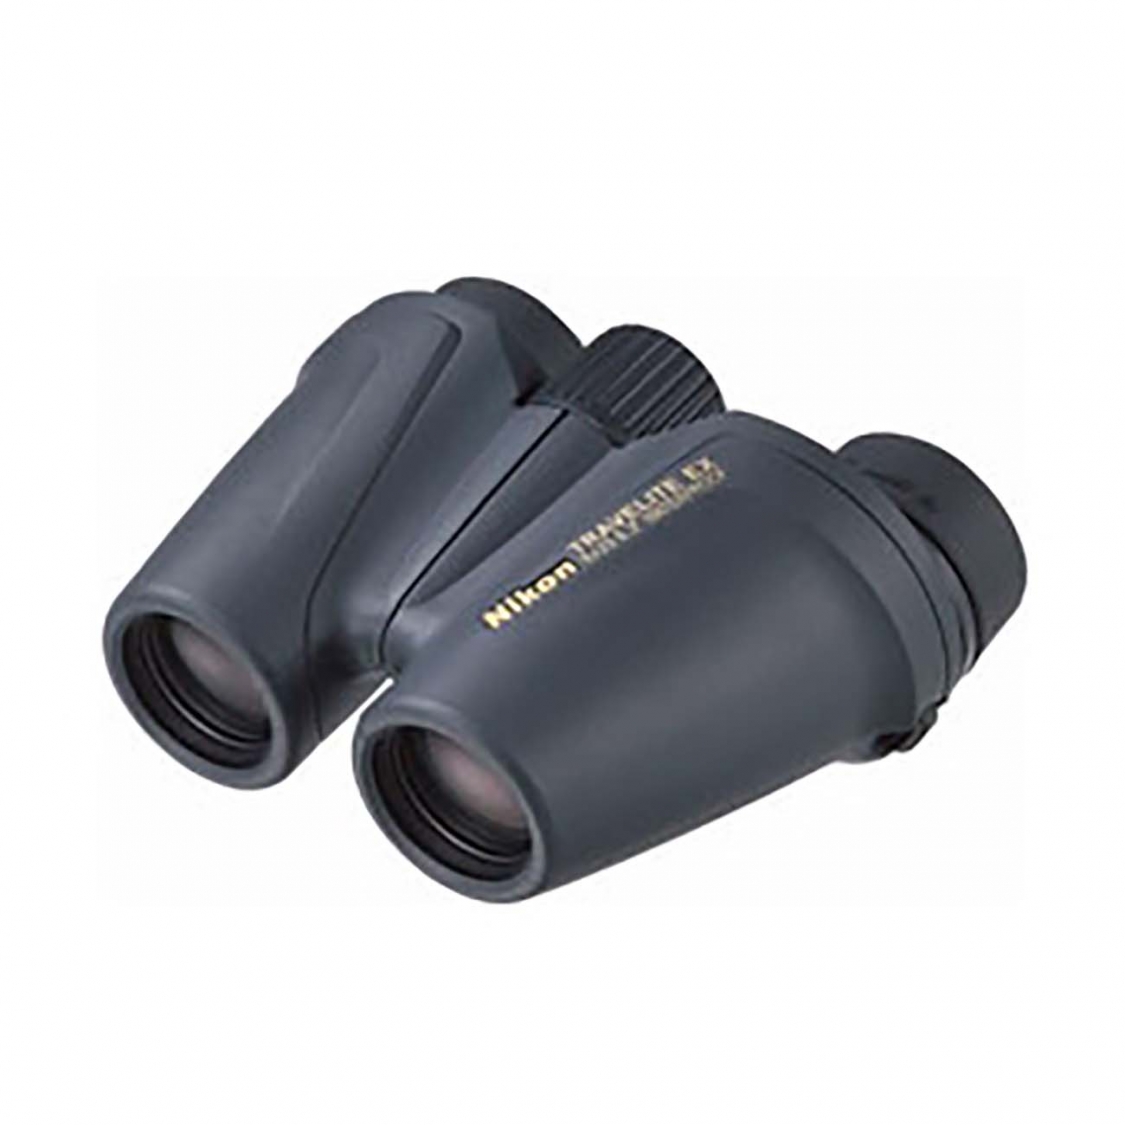 Nikon Travelite EX 8x25 CF WP Binoculars